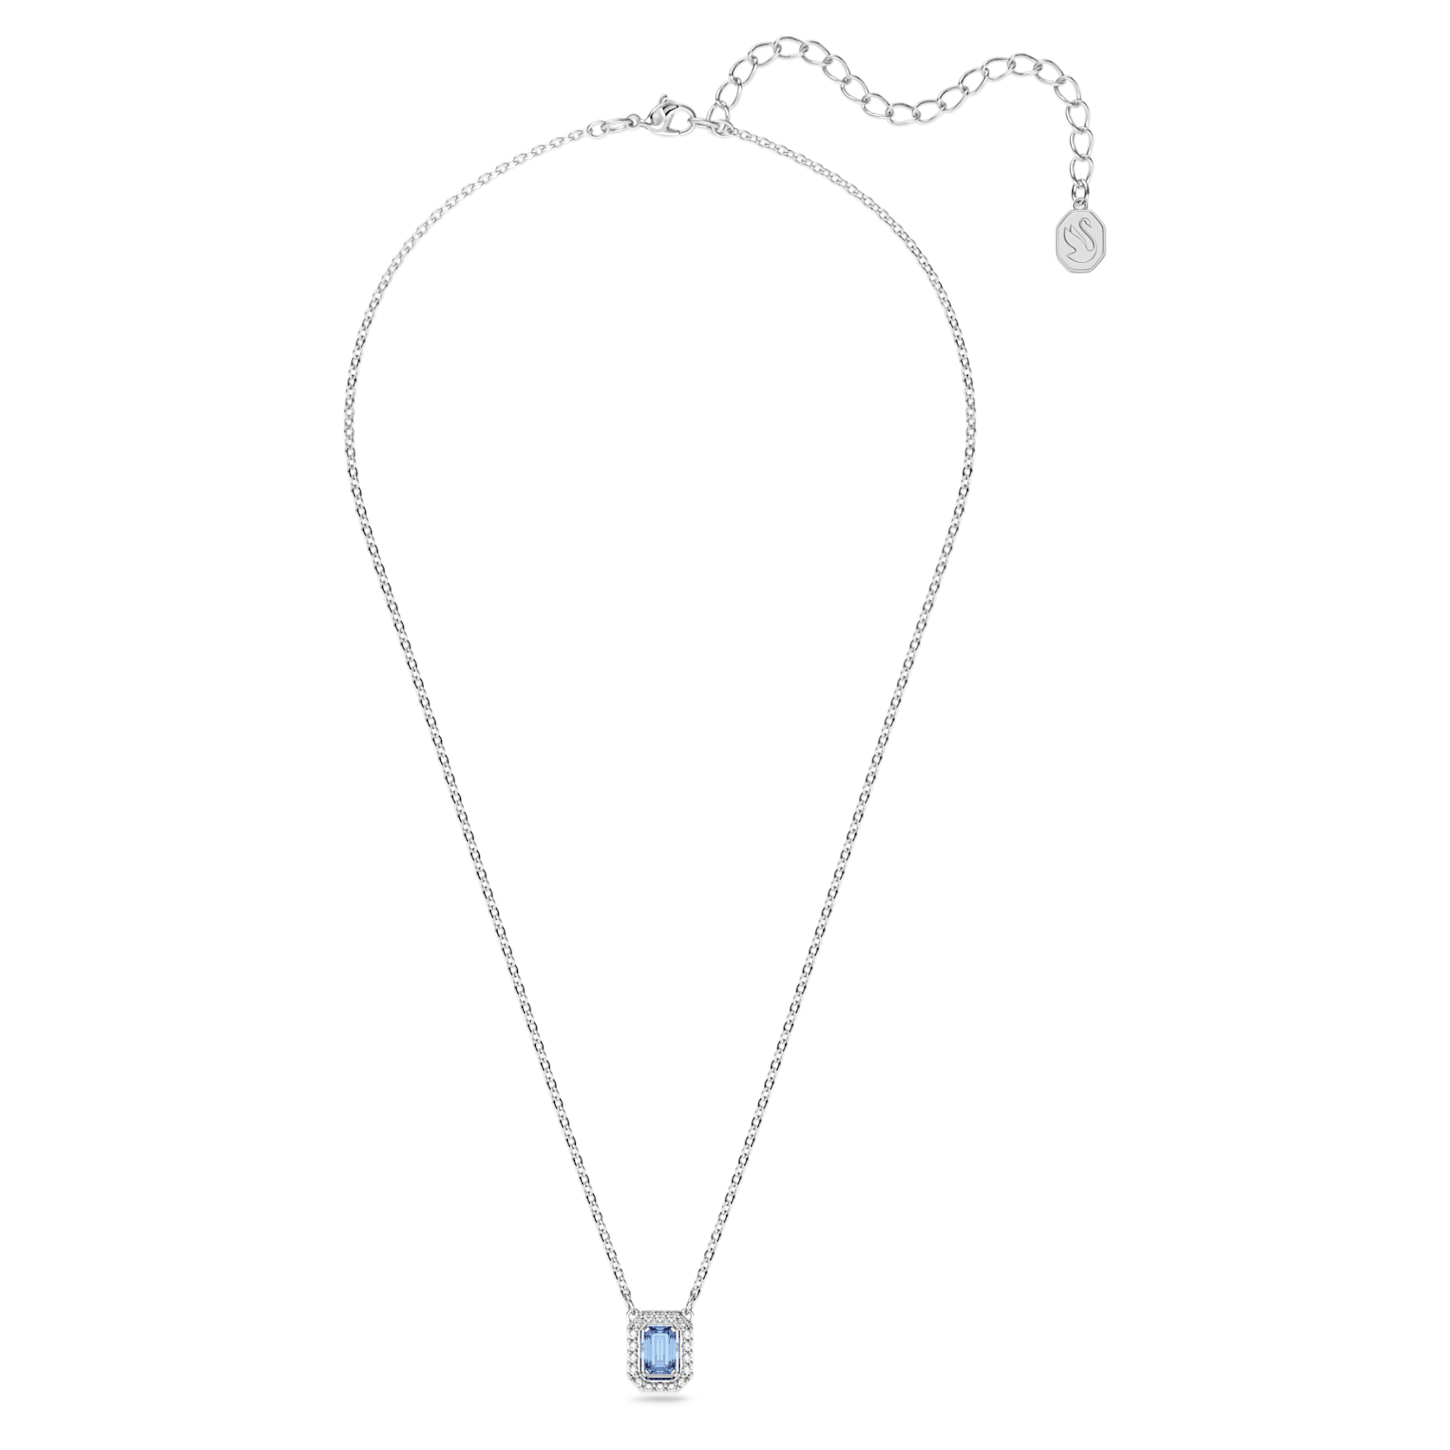 Millenia - Octagonal - Blue Silver - Necklace - Swarovski